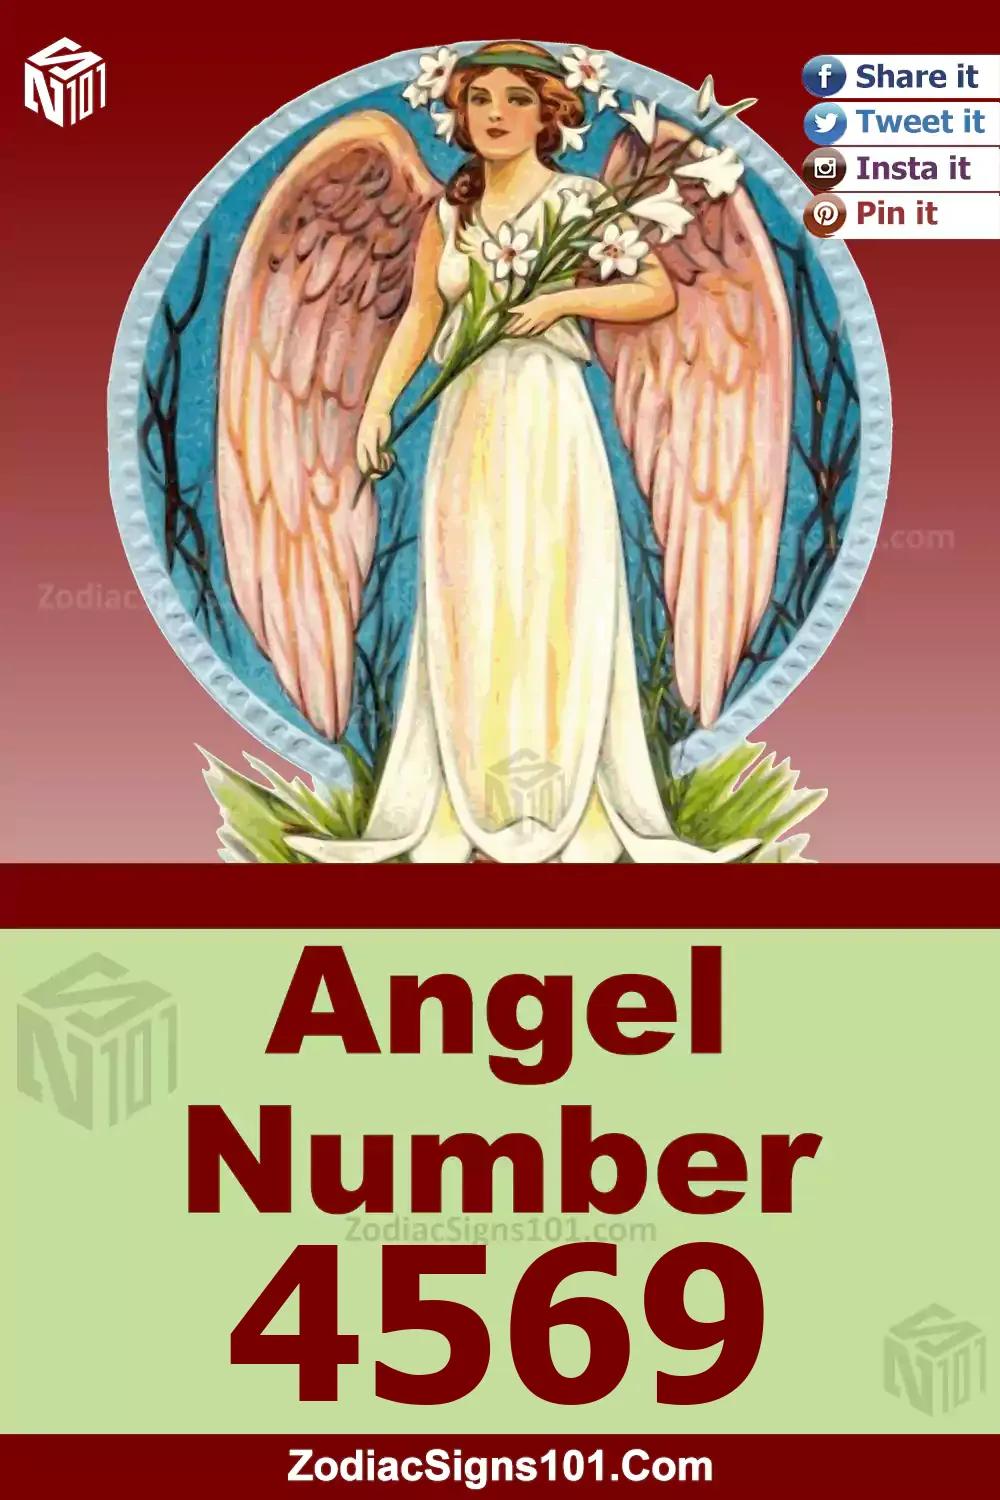 4569-Angel-Number-Meaning.jpg